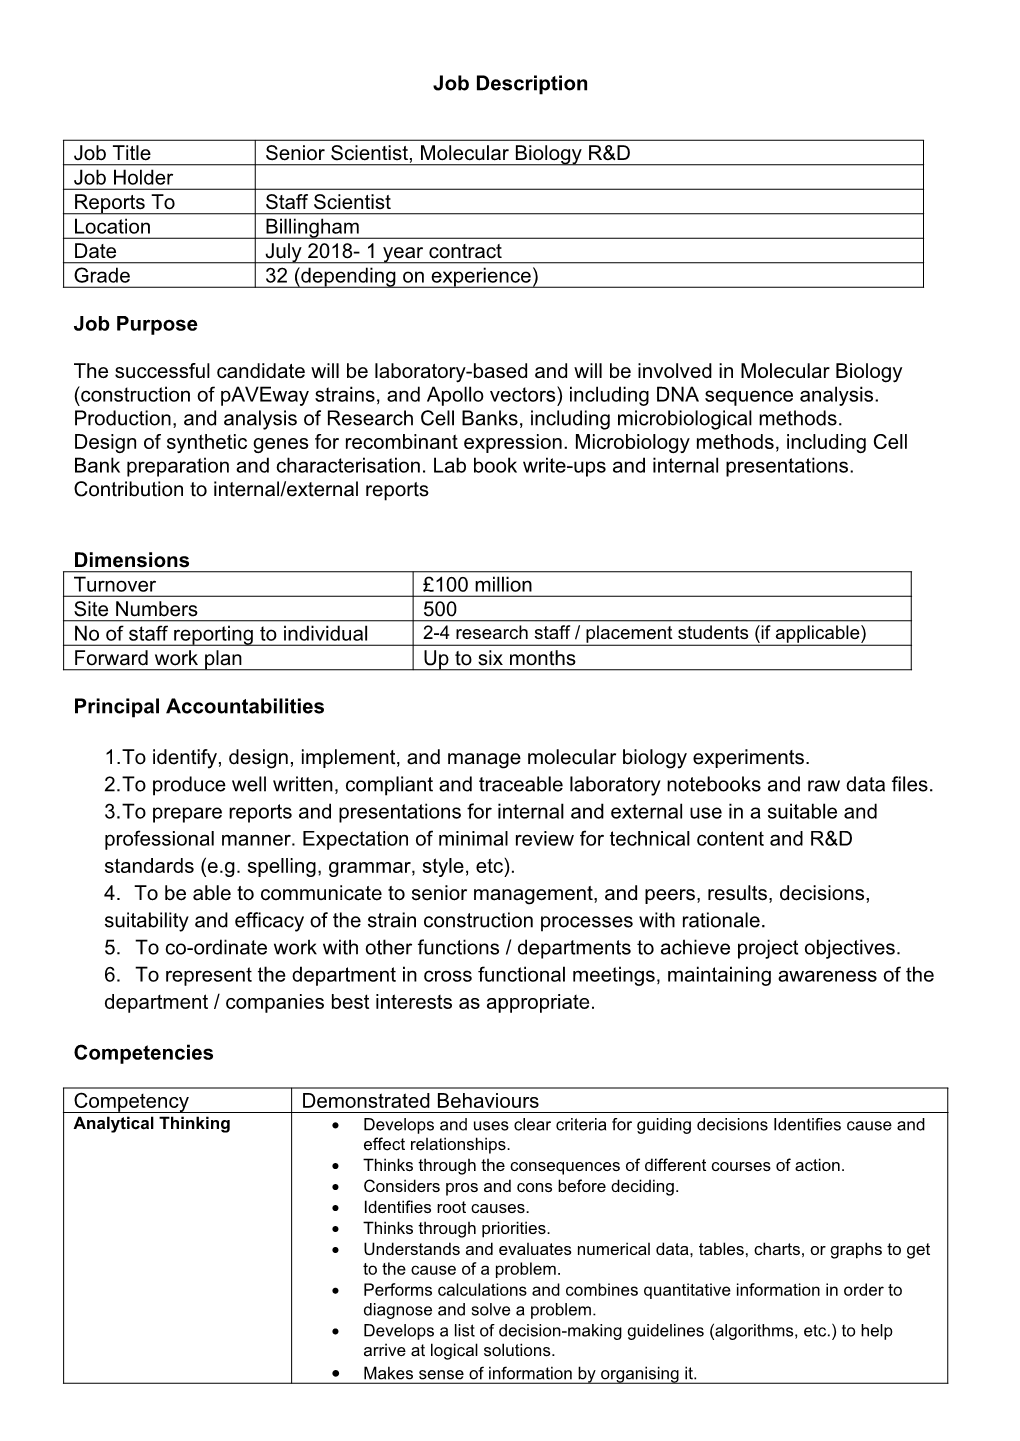 Job Description Job Title Senior Scientist, Molecular Biology R&D Job Holder Reports to Staff Scientist Location Billingham